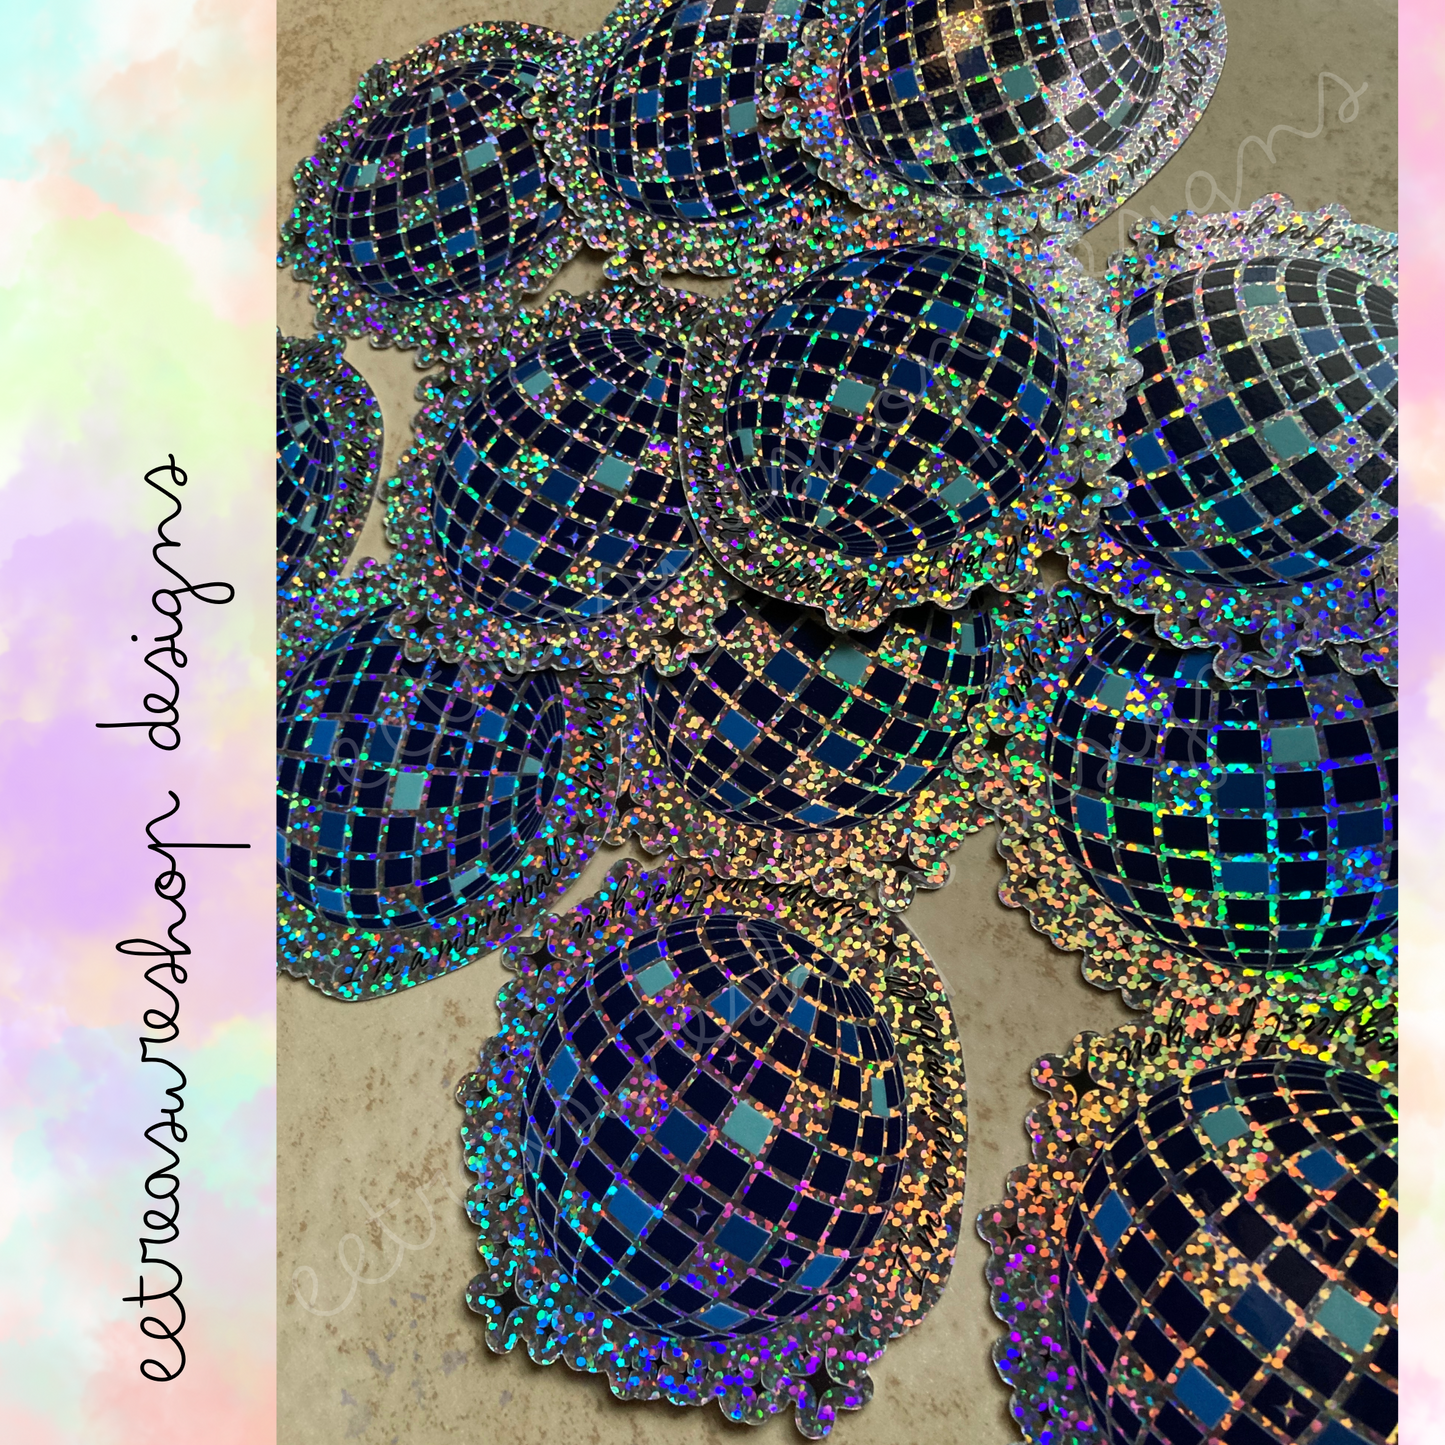 Swiftie Taylor Swift Inspired Mirrorball Holographic Glitter Waterproof Vinyl Sticker